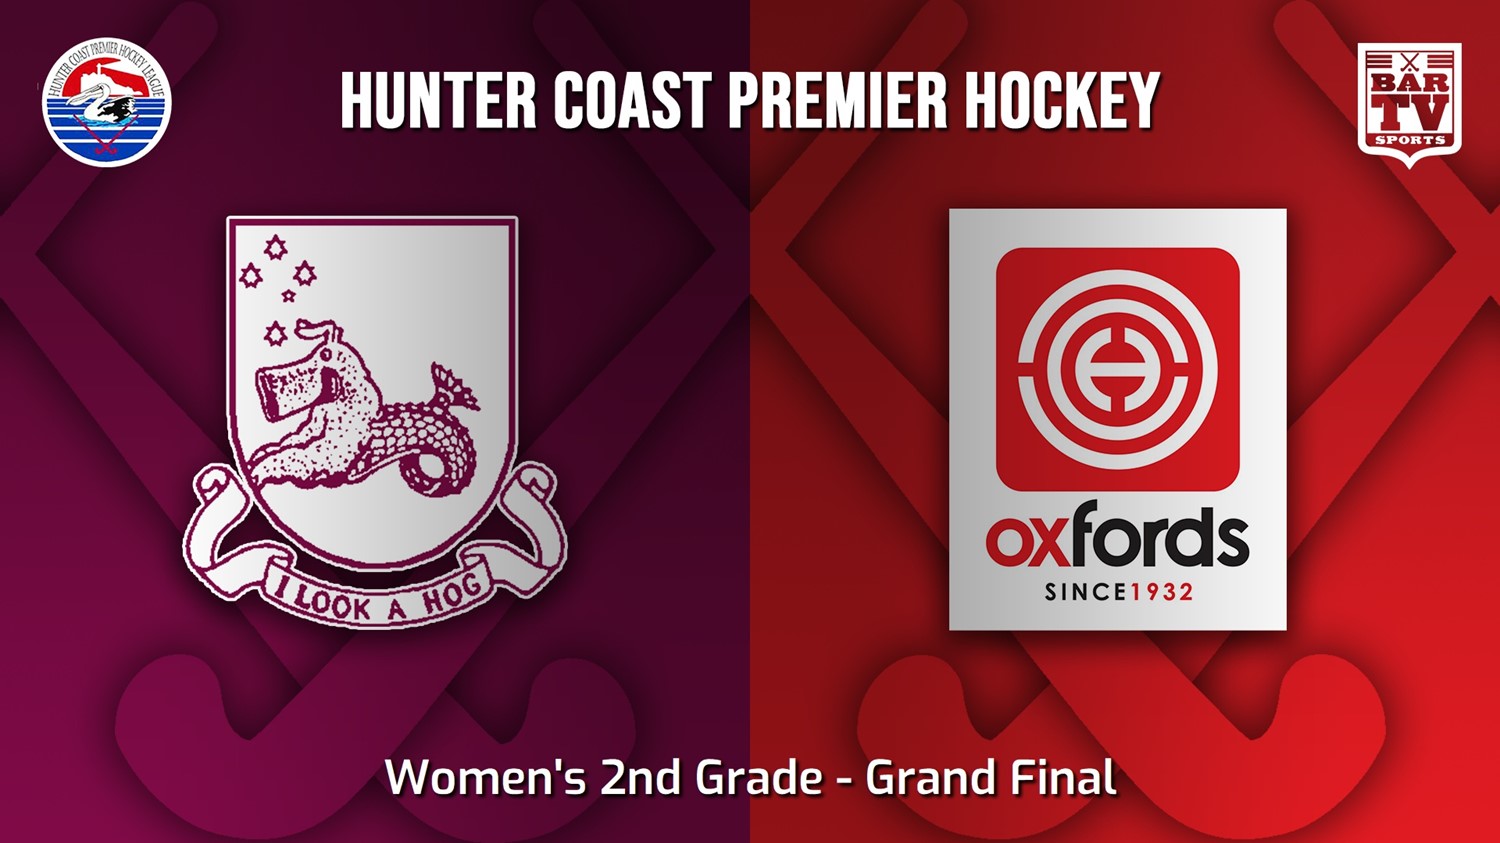 230916-Hunter Coast Premier Hockey Grand Final - Women's 2nd Grade - University Seapigs v Oxfords Minigame Slate Image